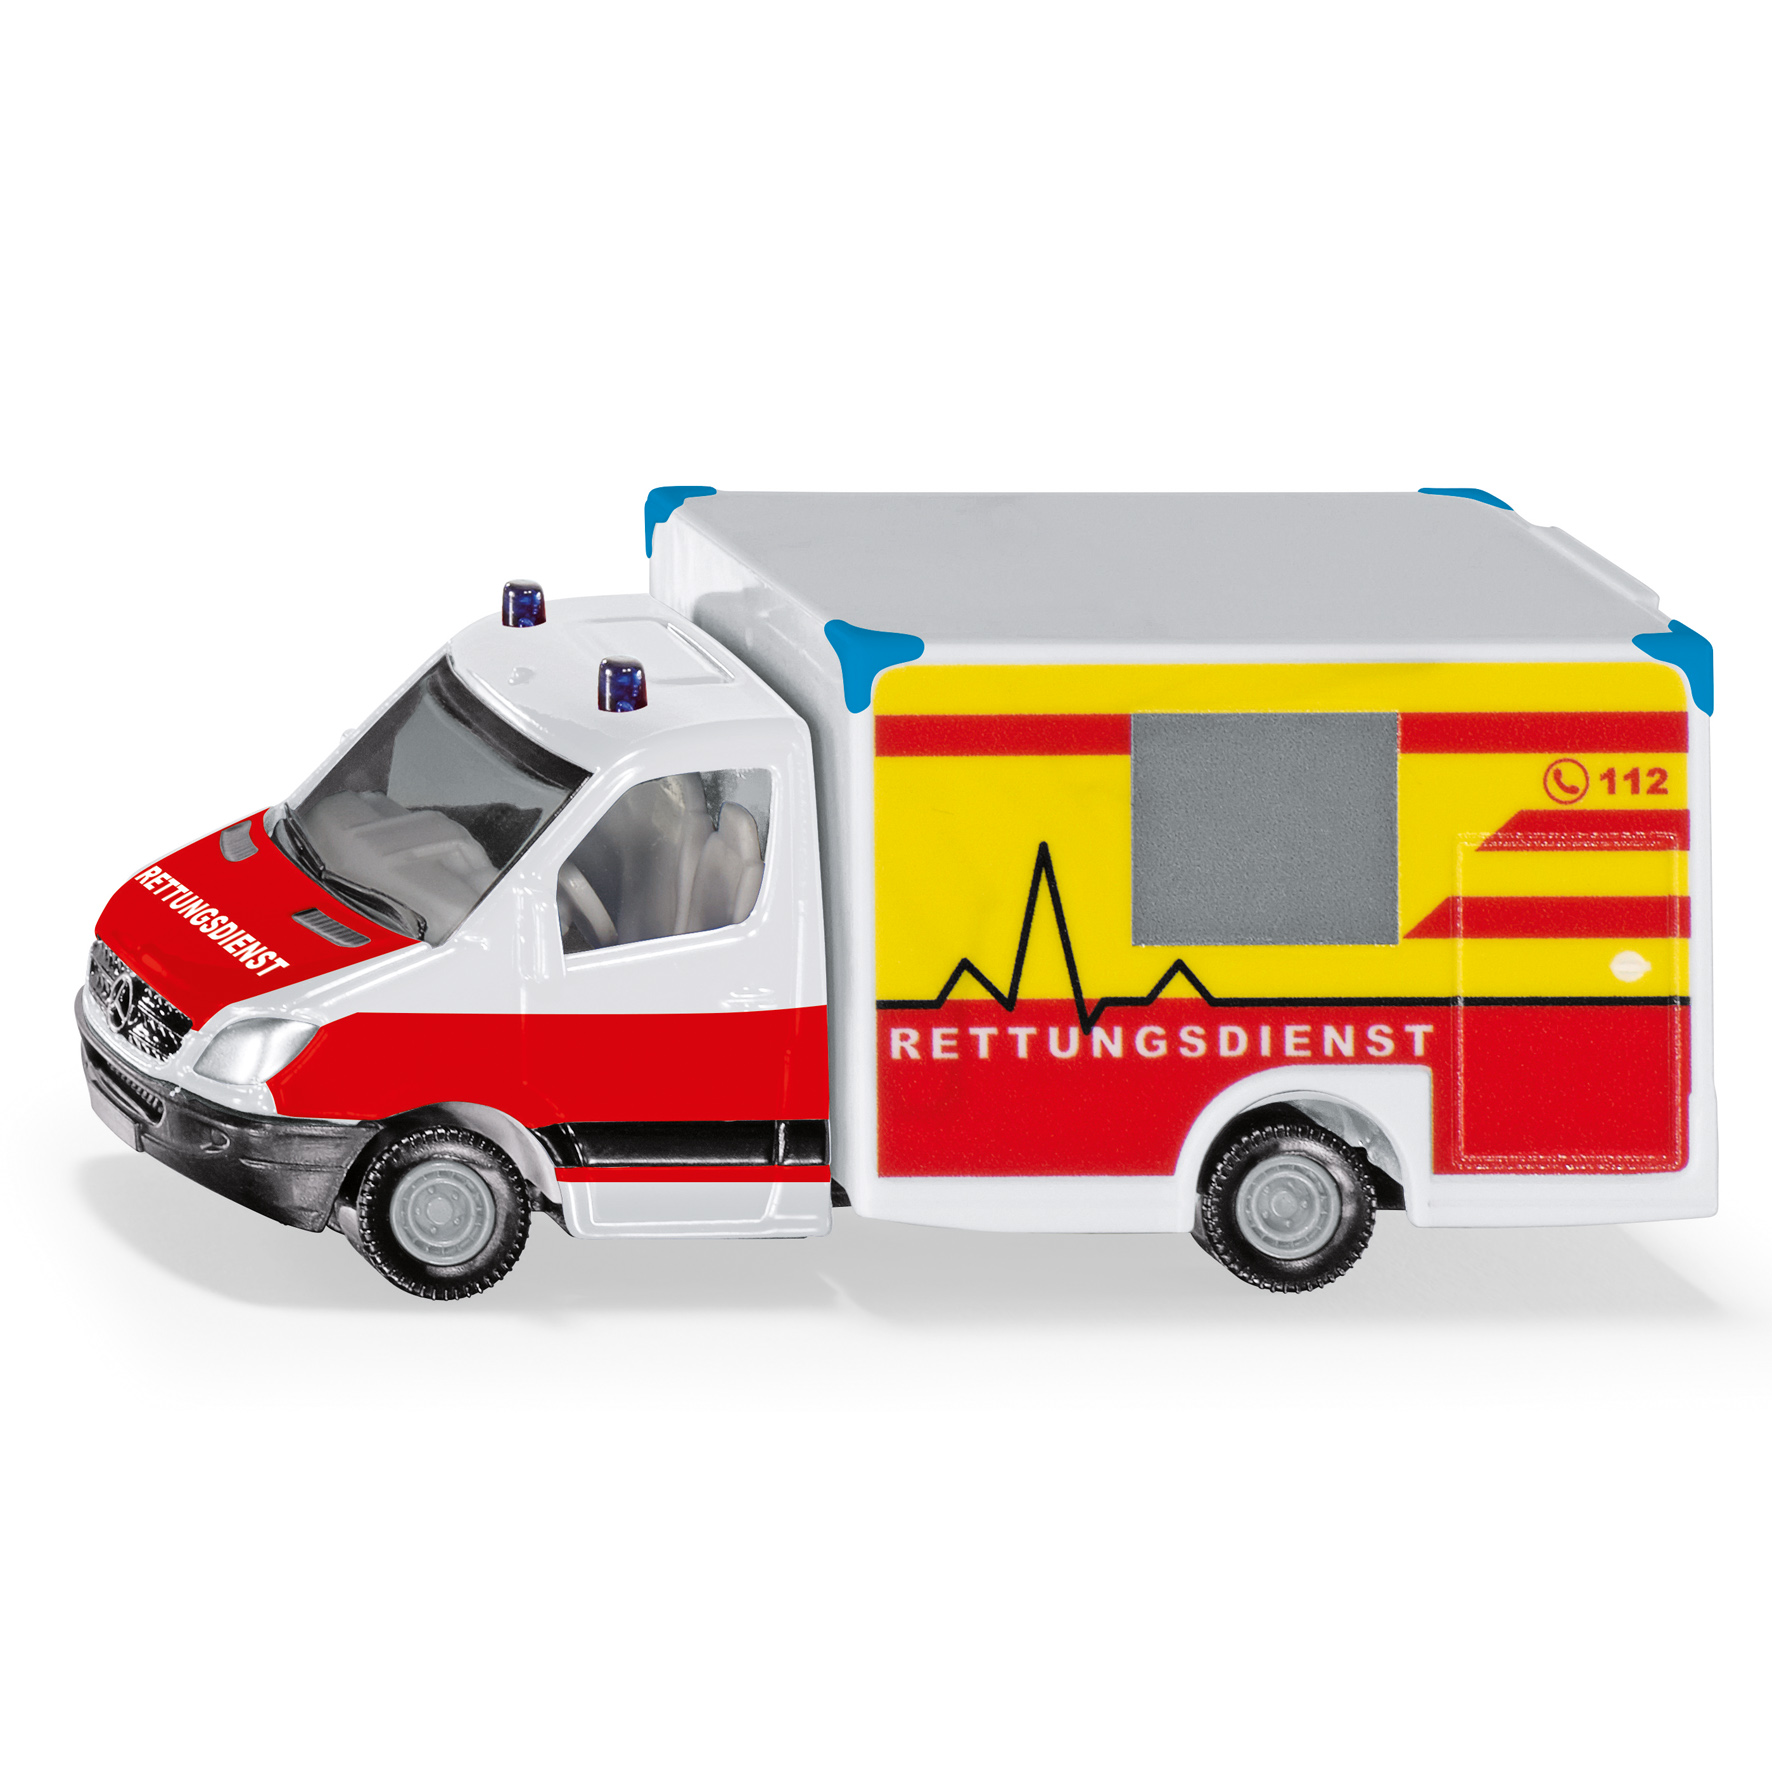 Work Vehicles ambulance